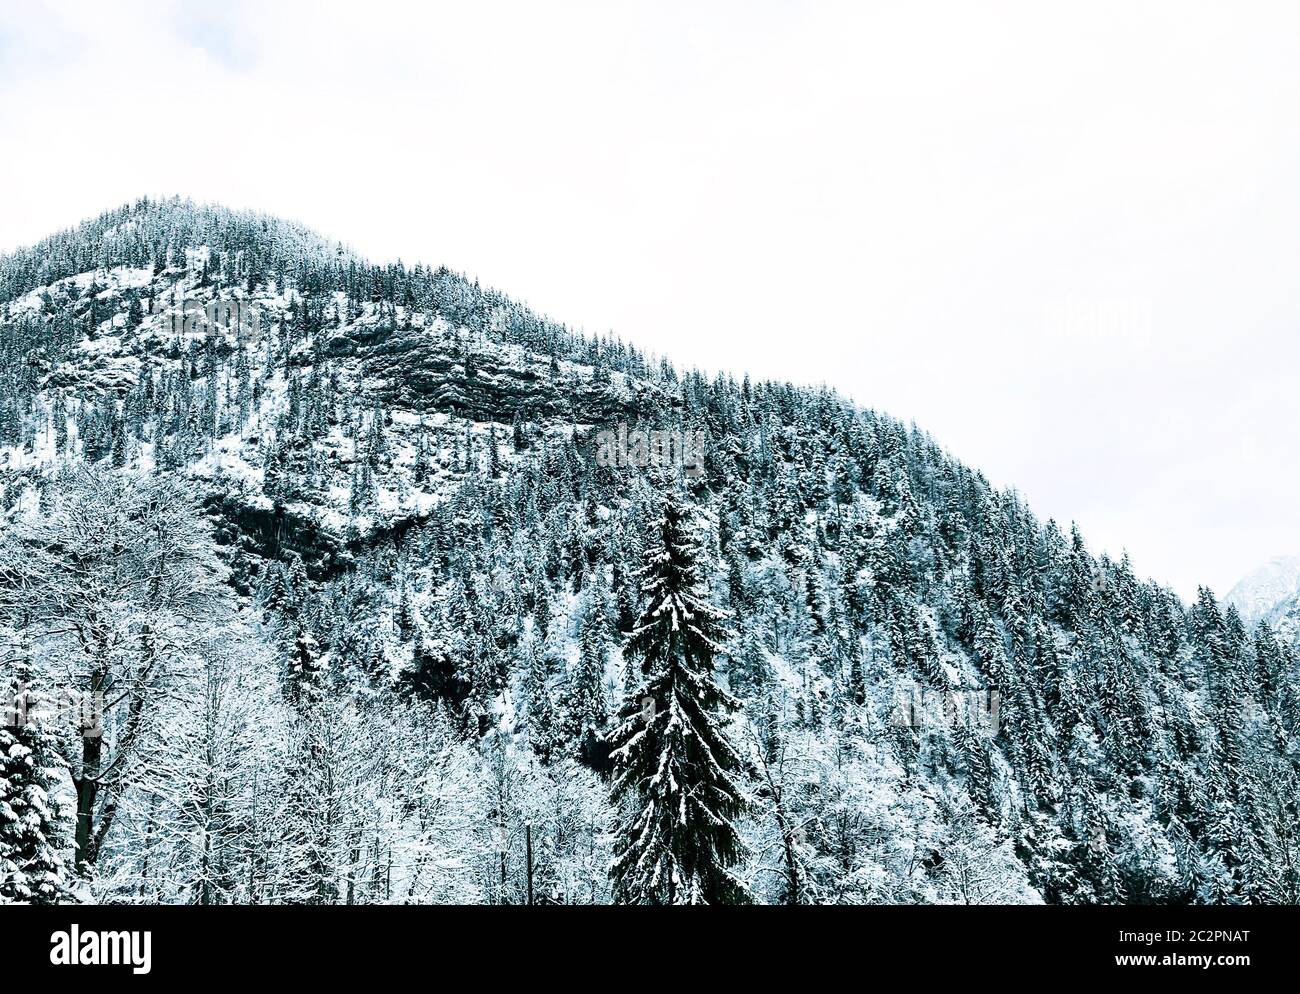 Hallstatt dreamscape winter snow mountain landscape outdoor adventure in snowy day winter season, Austria Stock Photo